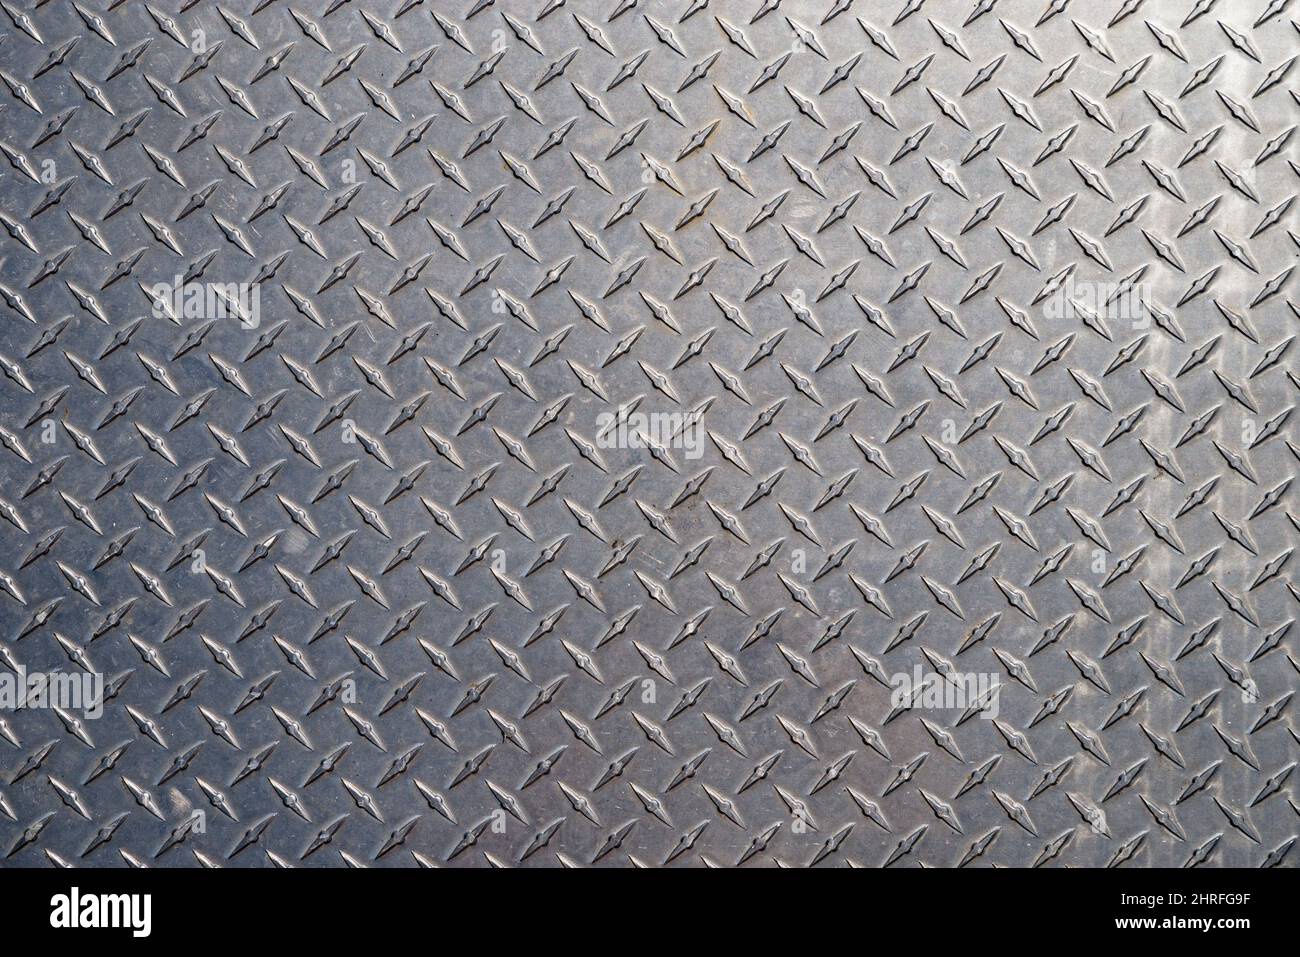 no slip new diamond textured metal plate background texture Stock Photo